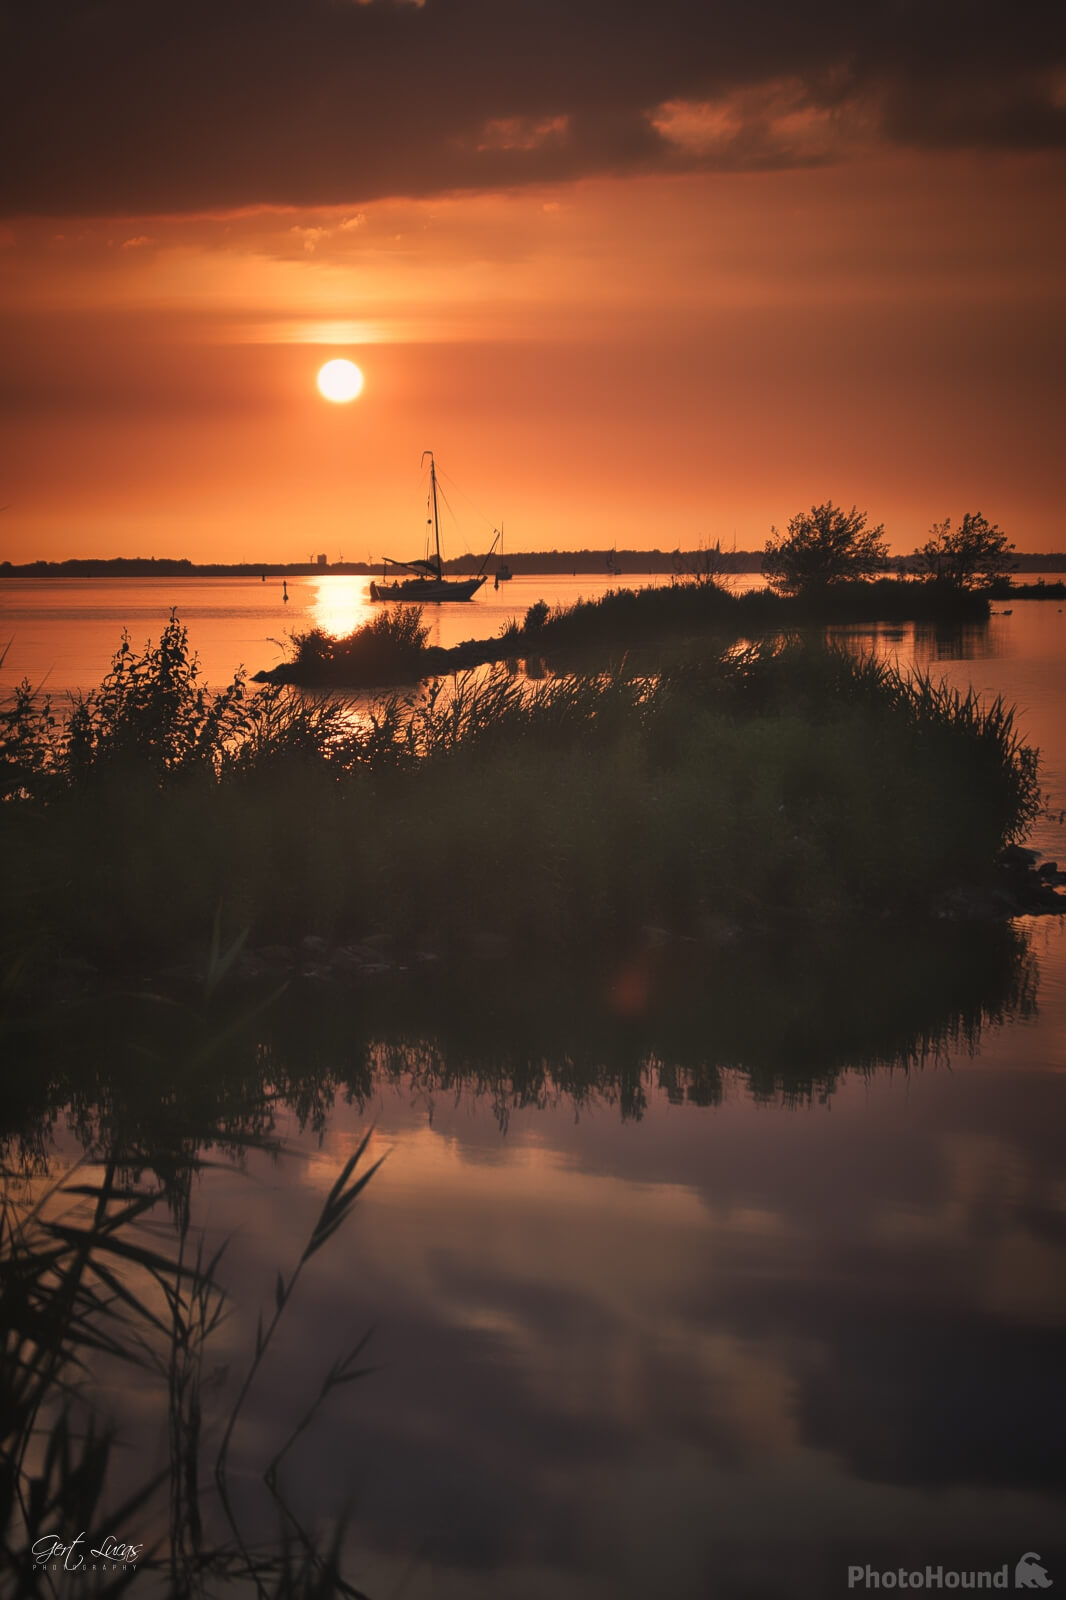 Image of Eemmeer Sunset from Eemhof Beachclub by Gert Lucas